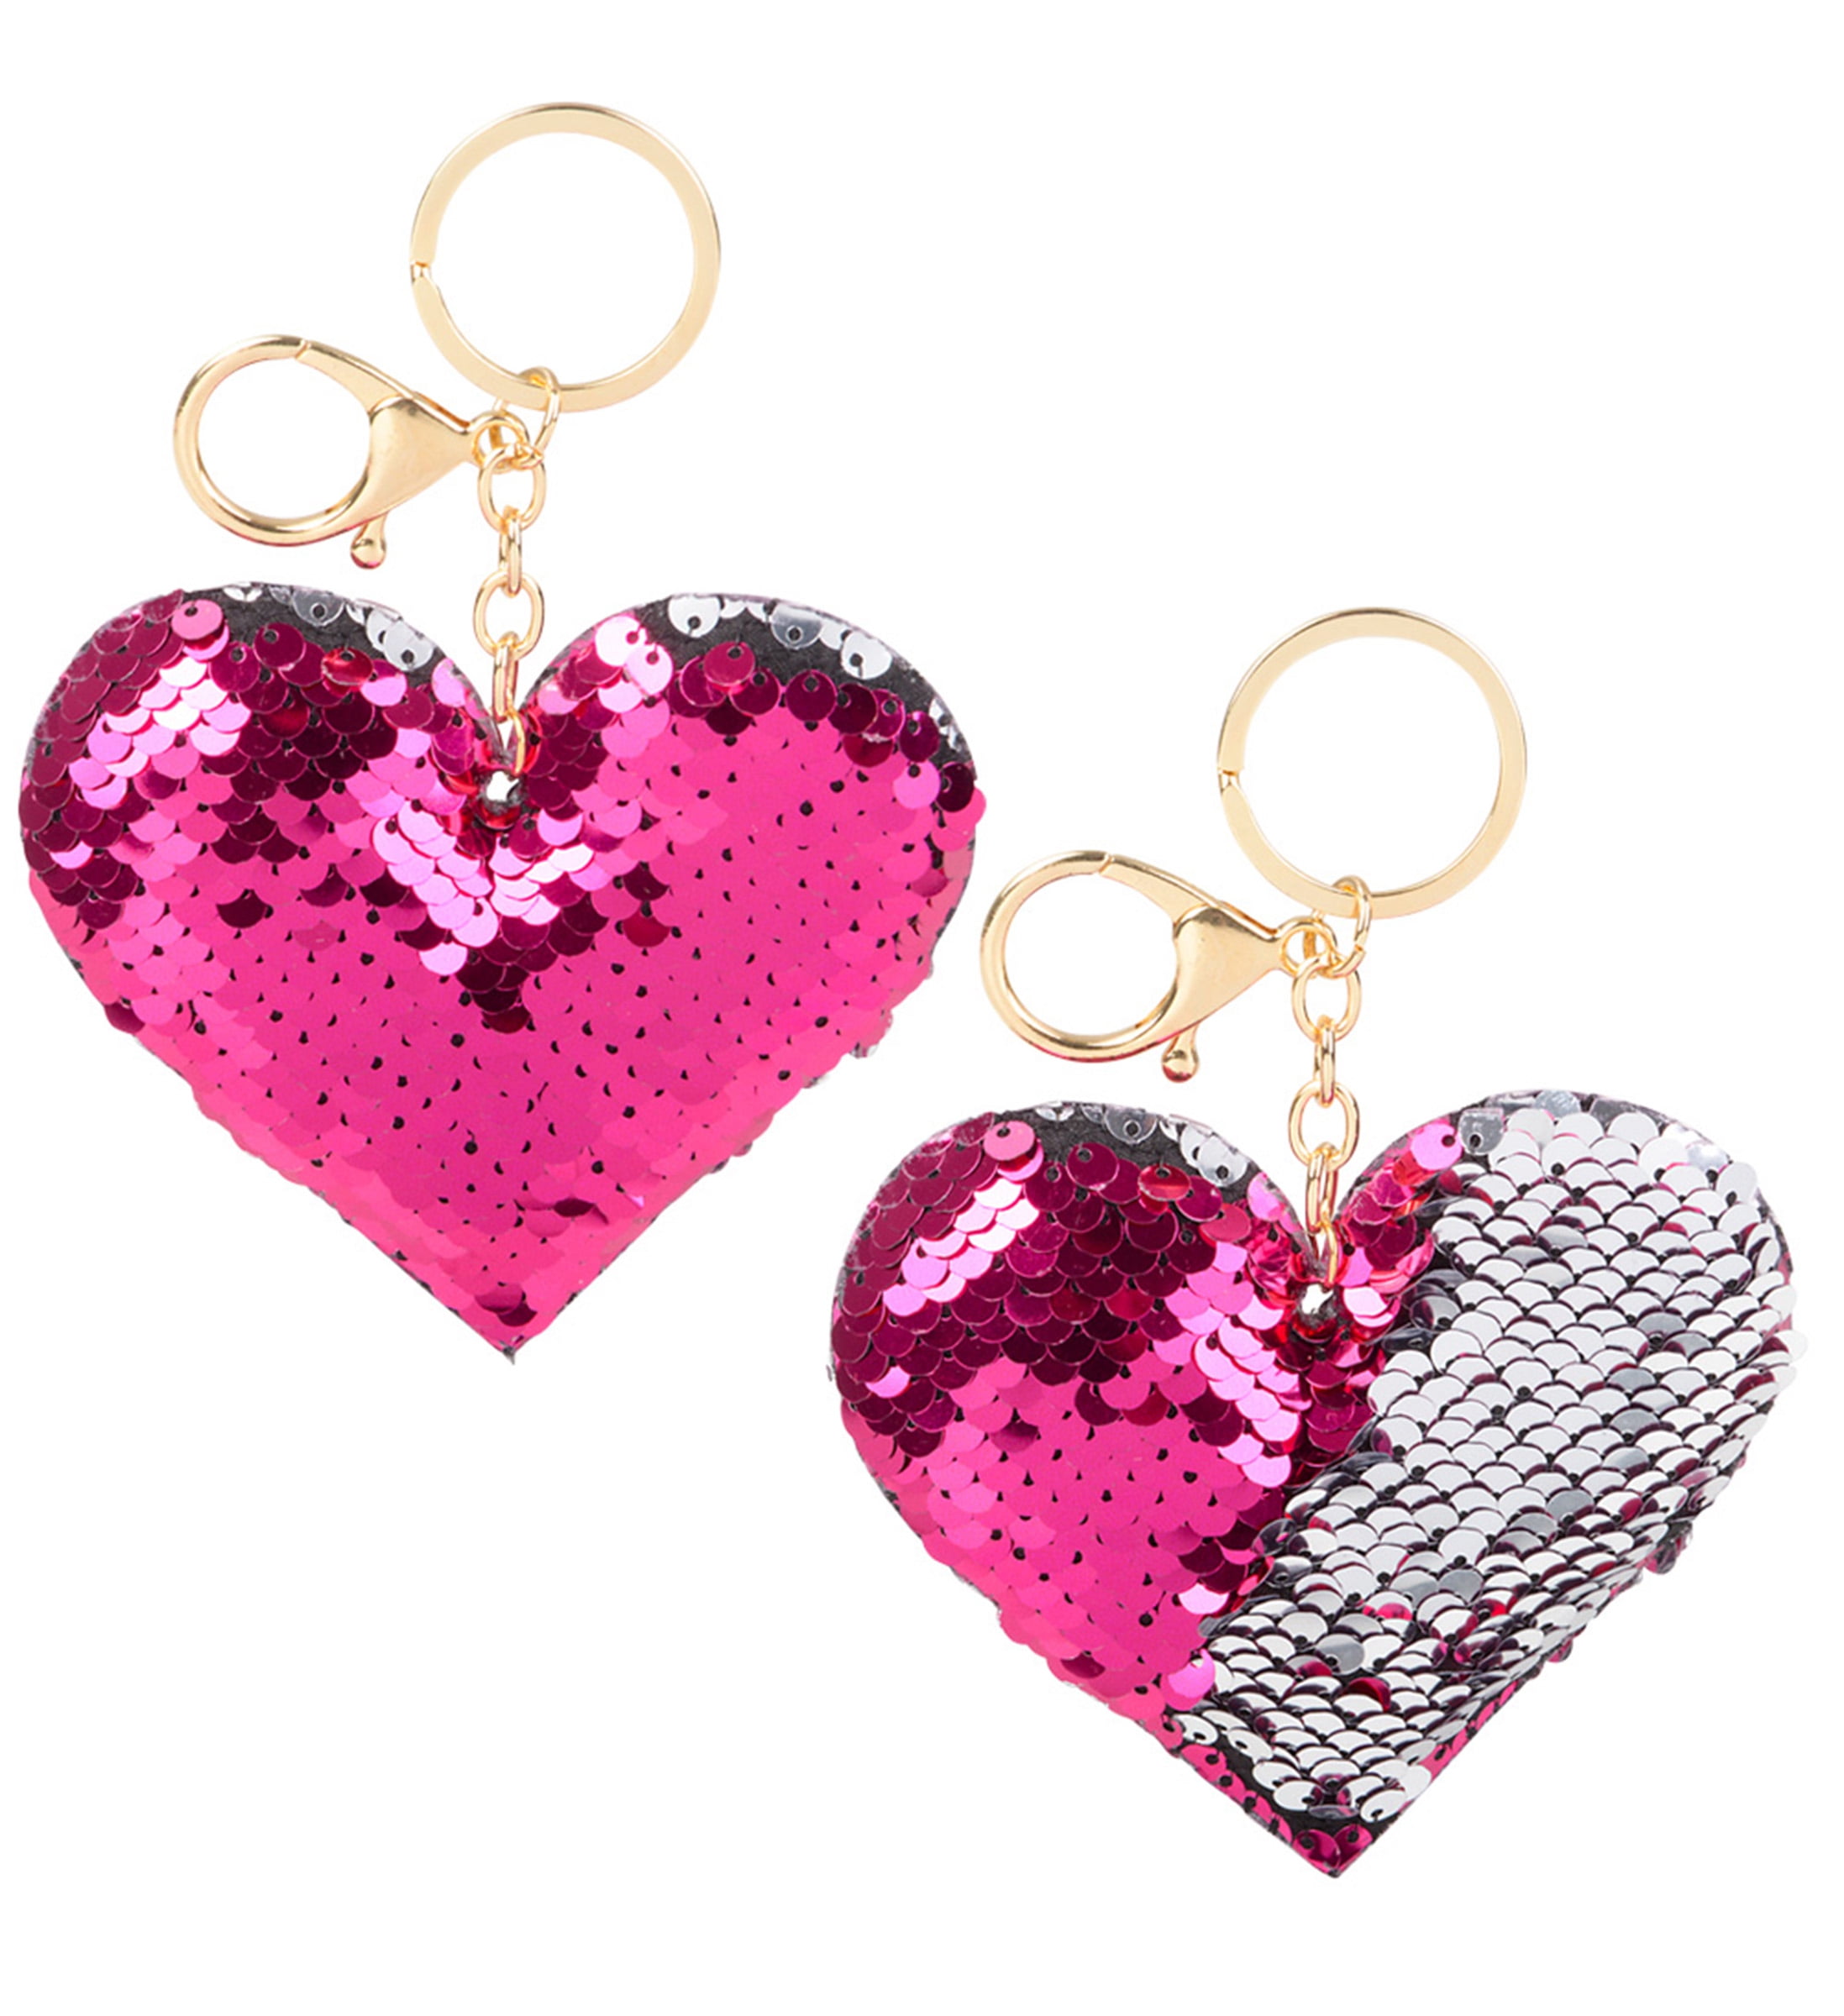 Shein 2pcs Mini Disco Ball Keychain Cute Shiny Key Chain Ring Bag Backpack Charm Phone Pendant Women Girls Gift